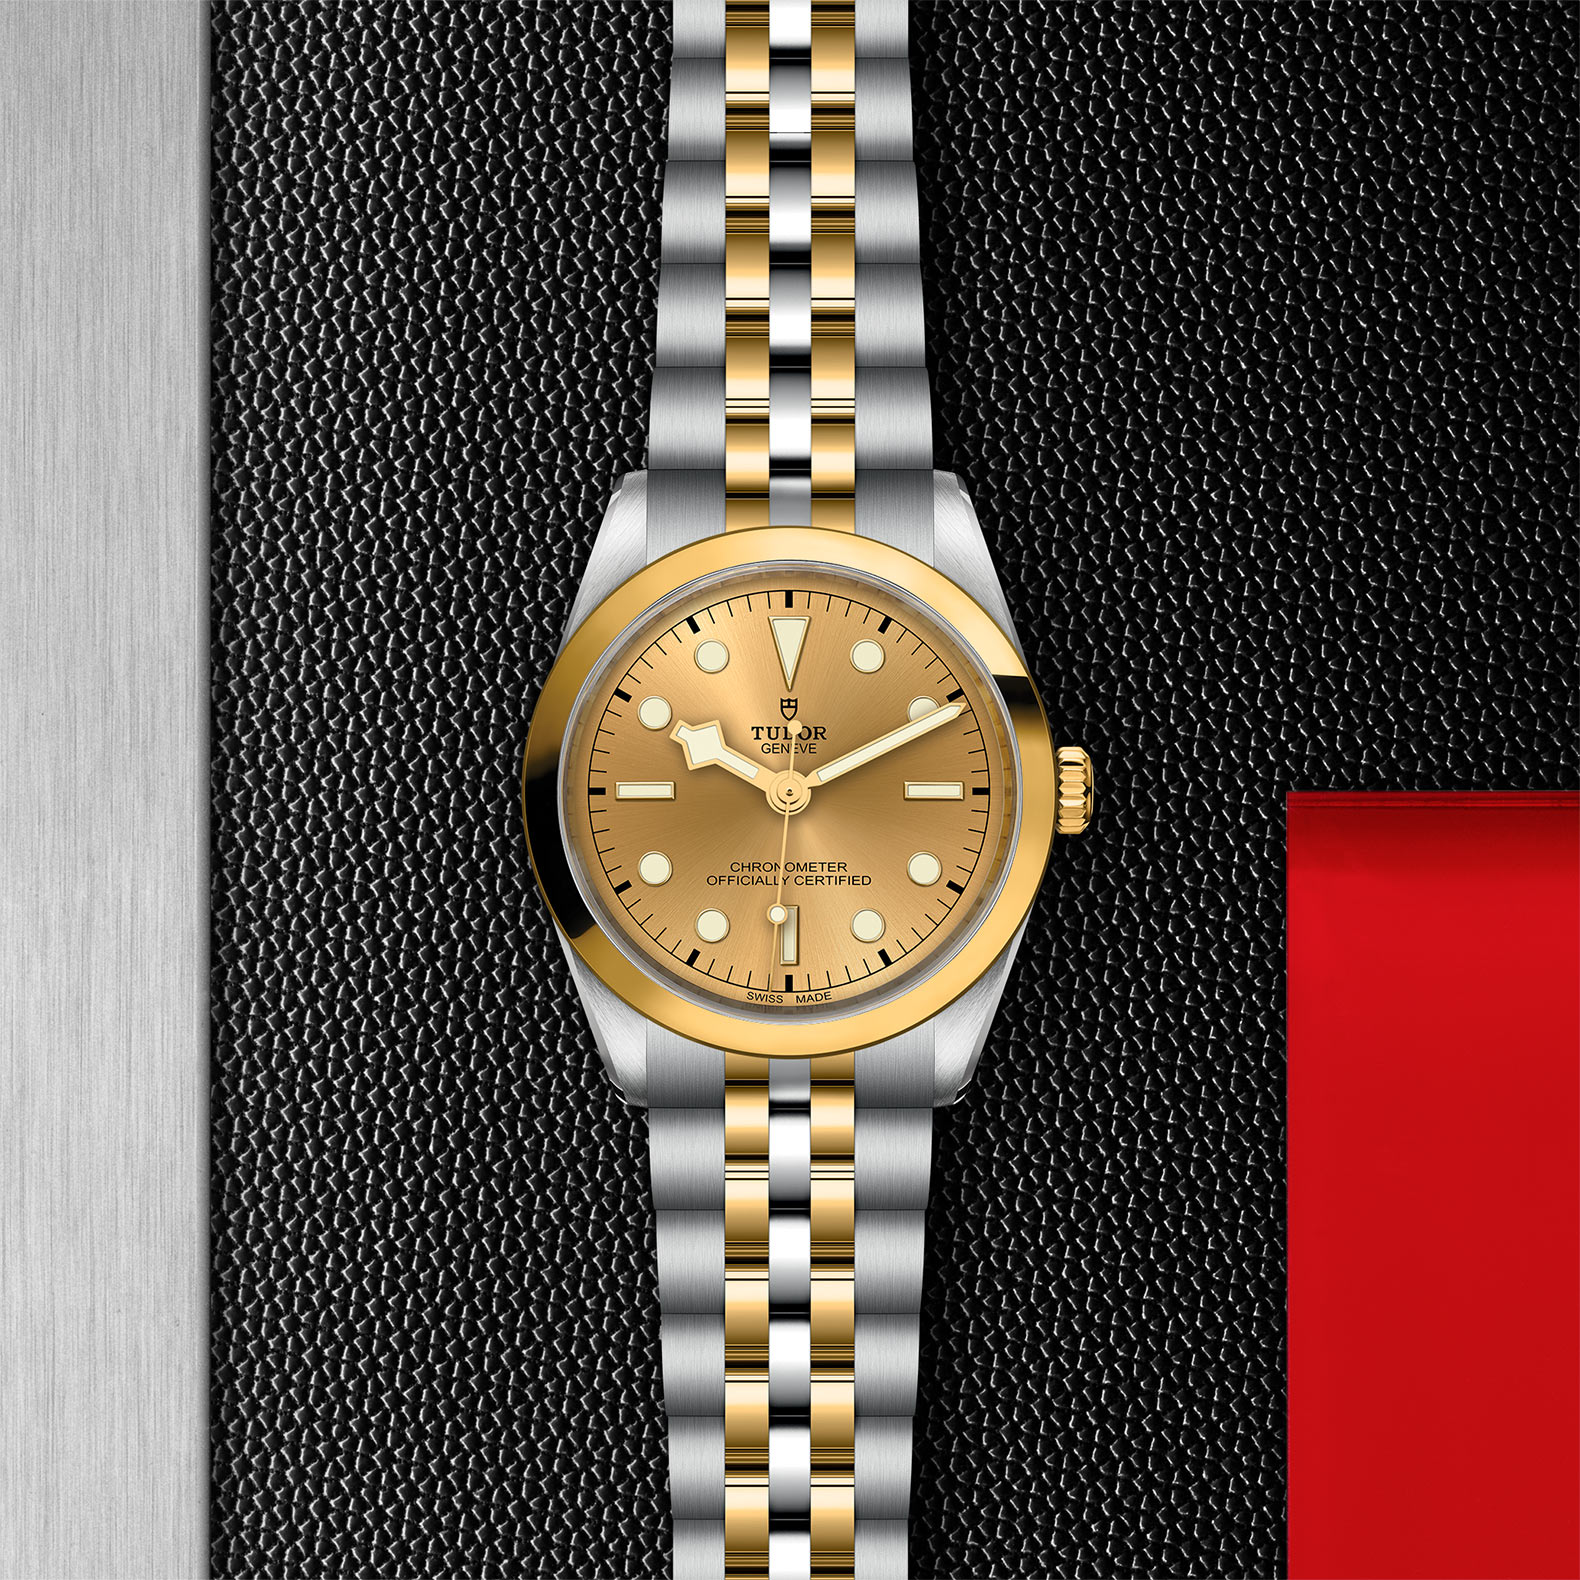 Tudor Watch Assets M79643 0005 Instore Flatlay